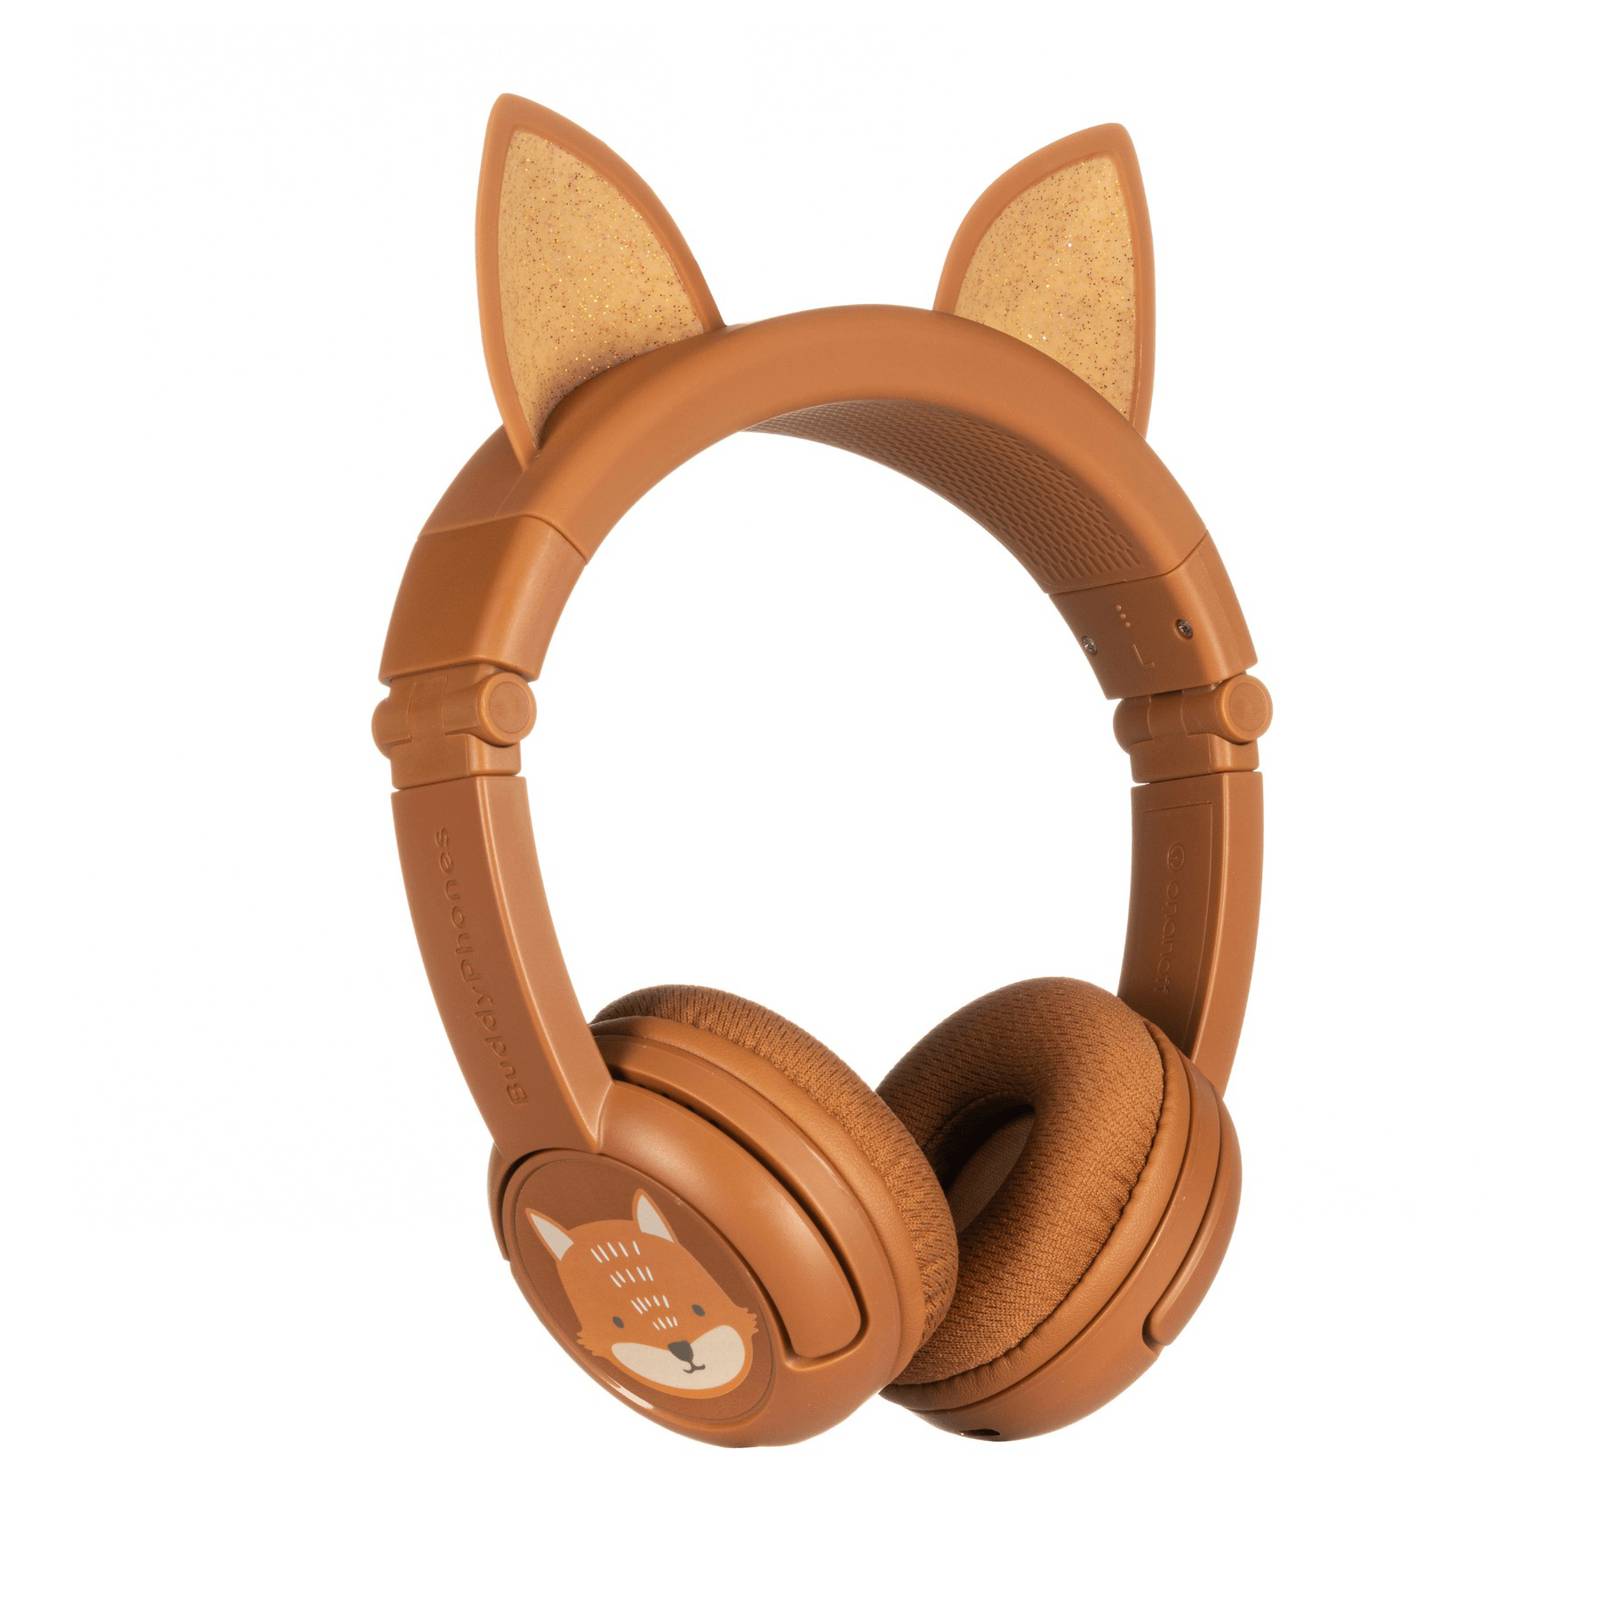 headohones for kids with glittery fox ears on the headband